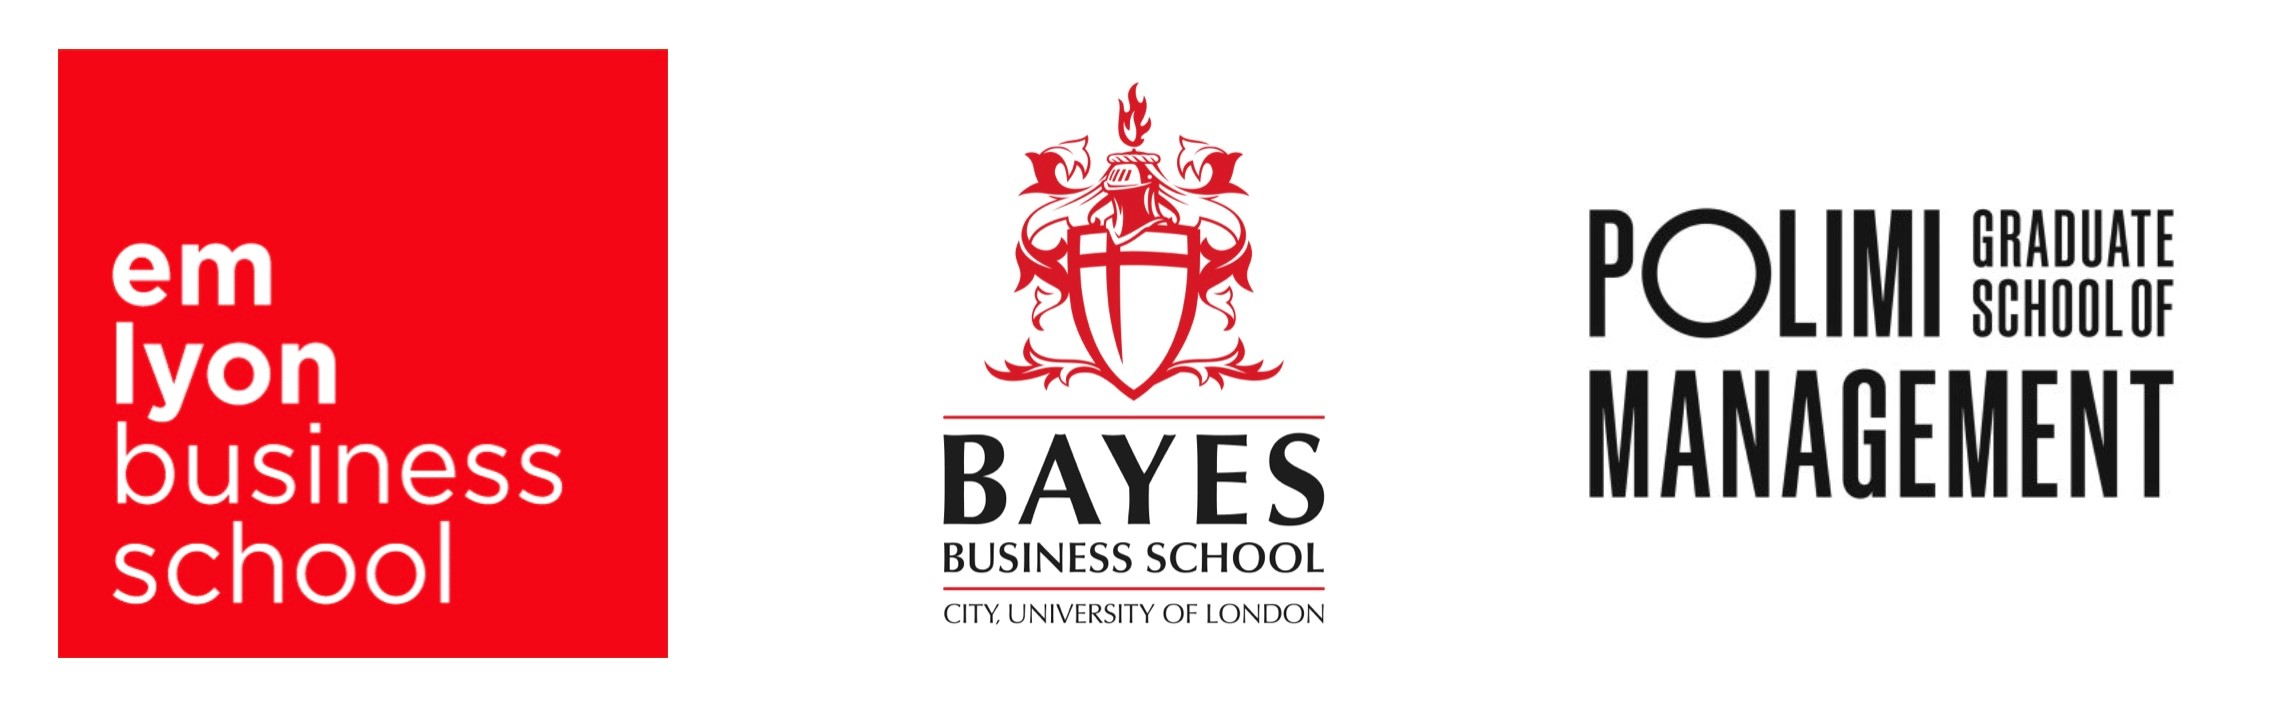 Emlyon, Bayes and Polimi logos